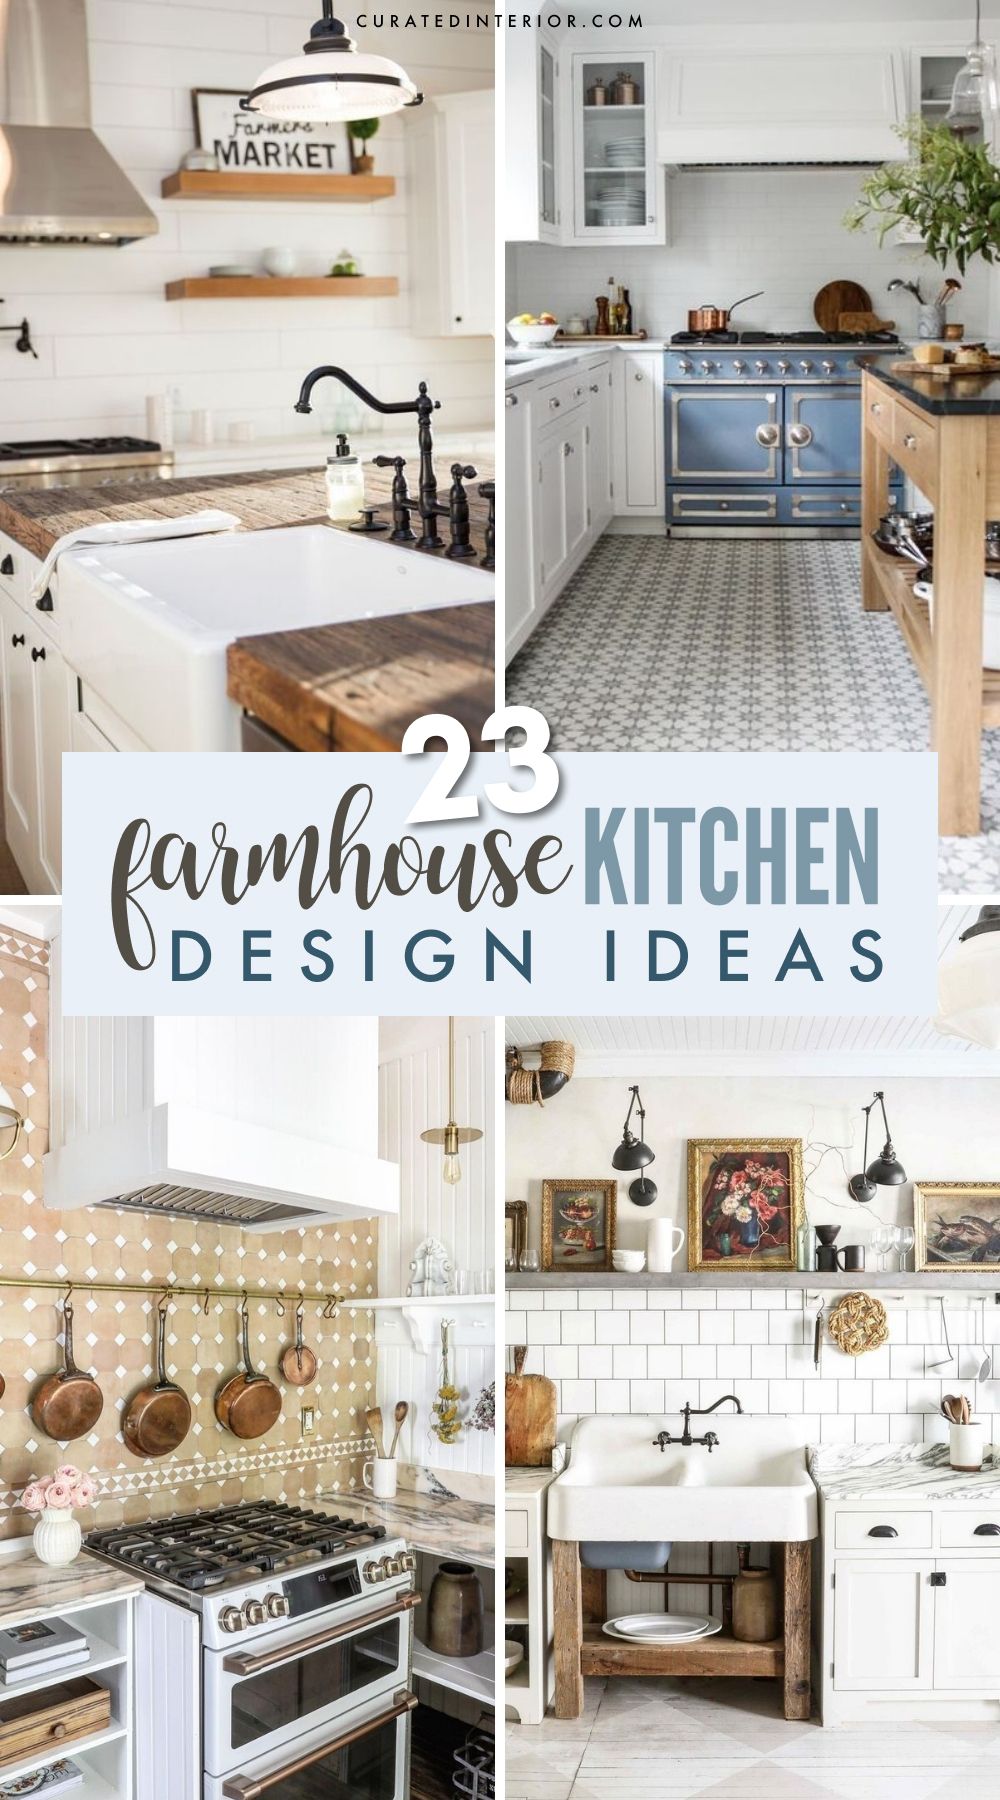 https://curatedinterior.com/wp-content/uploads/2020/11/23-Farmhouse-Kitchen-Design-Ideas.jpg